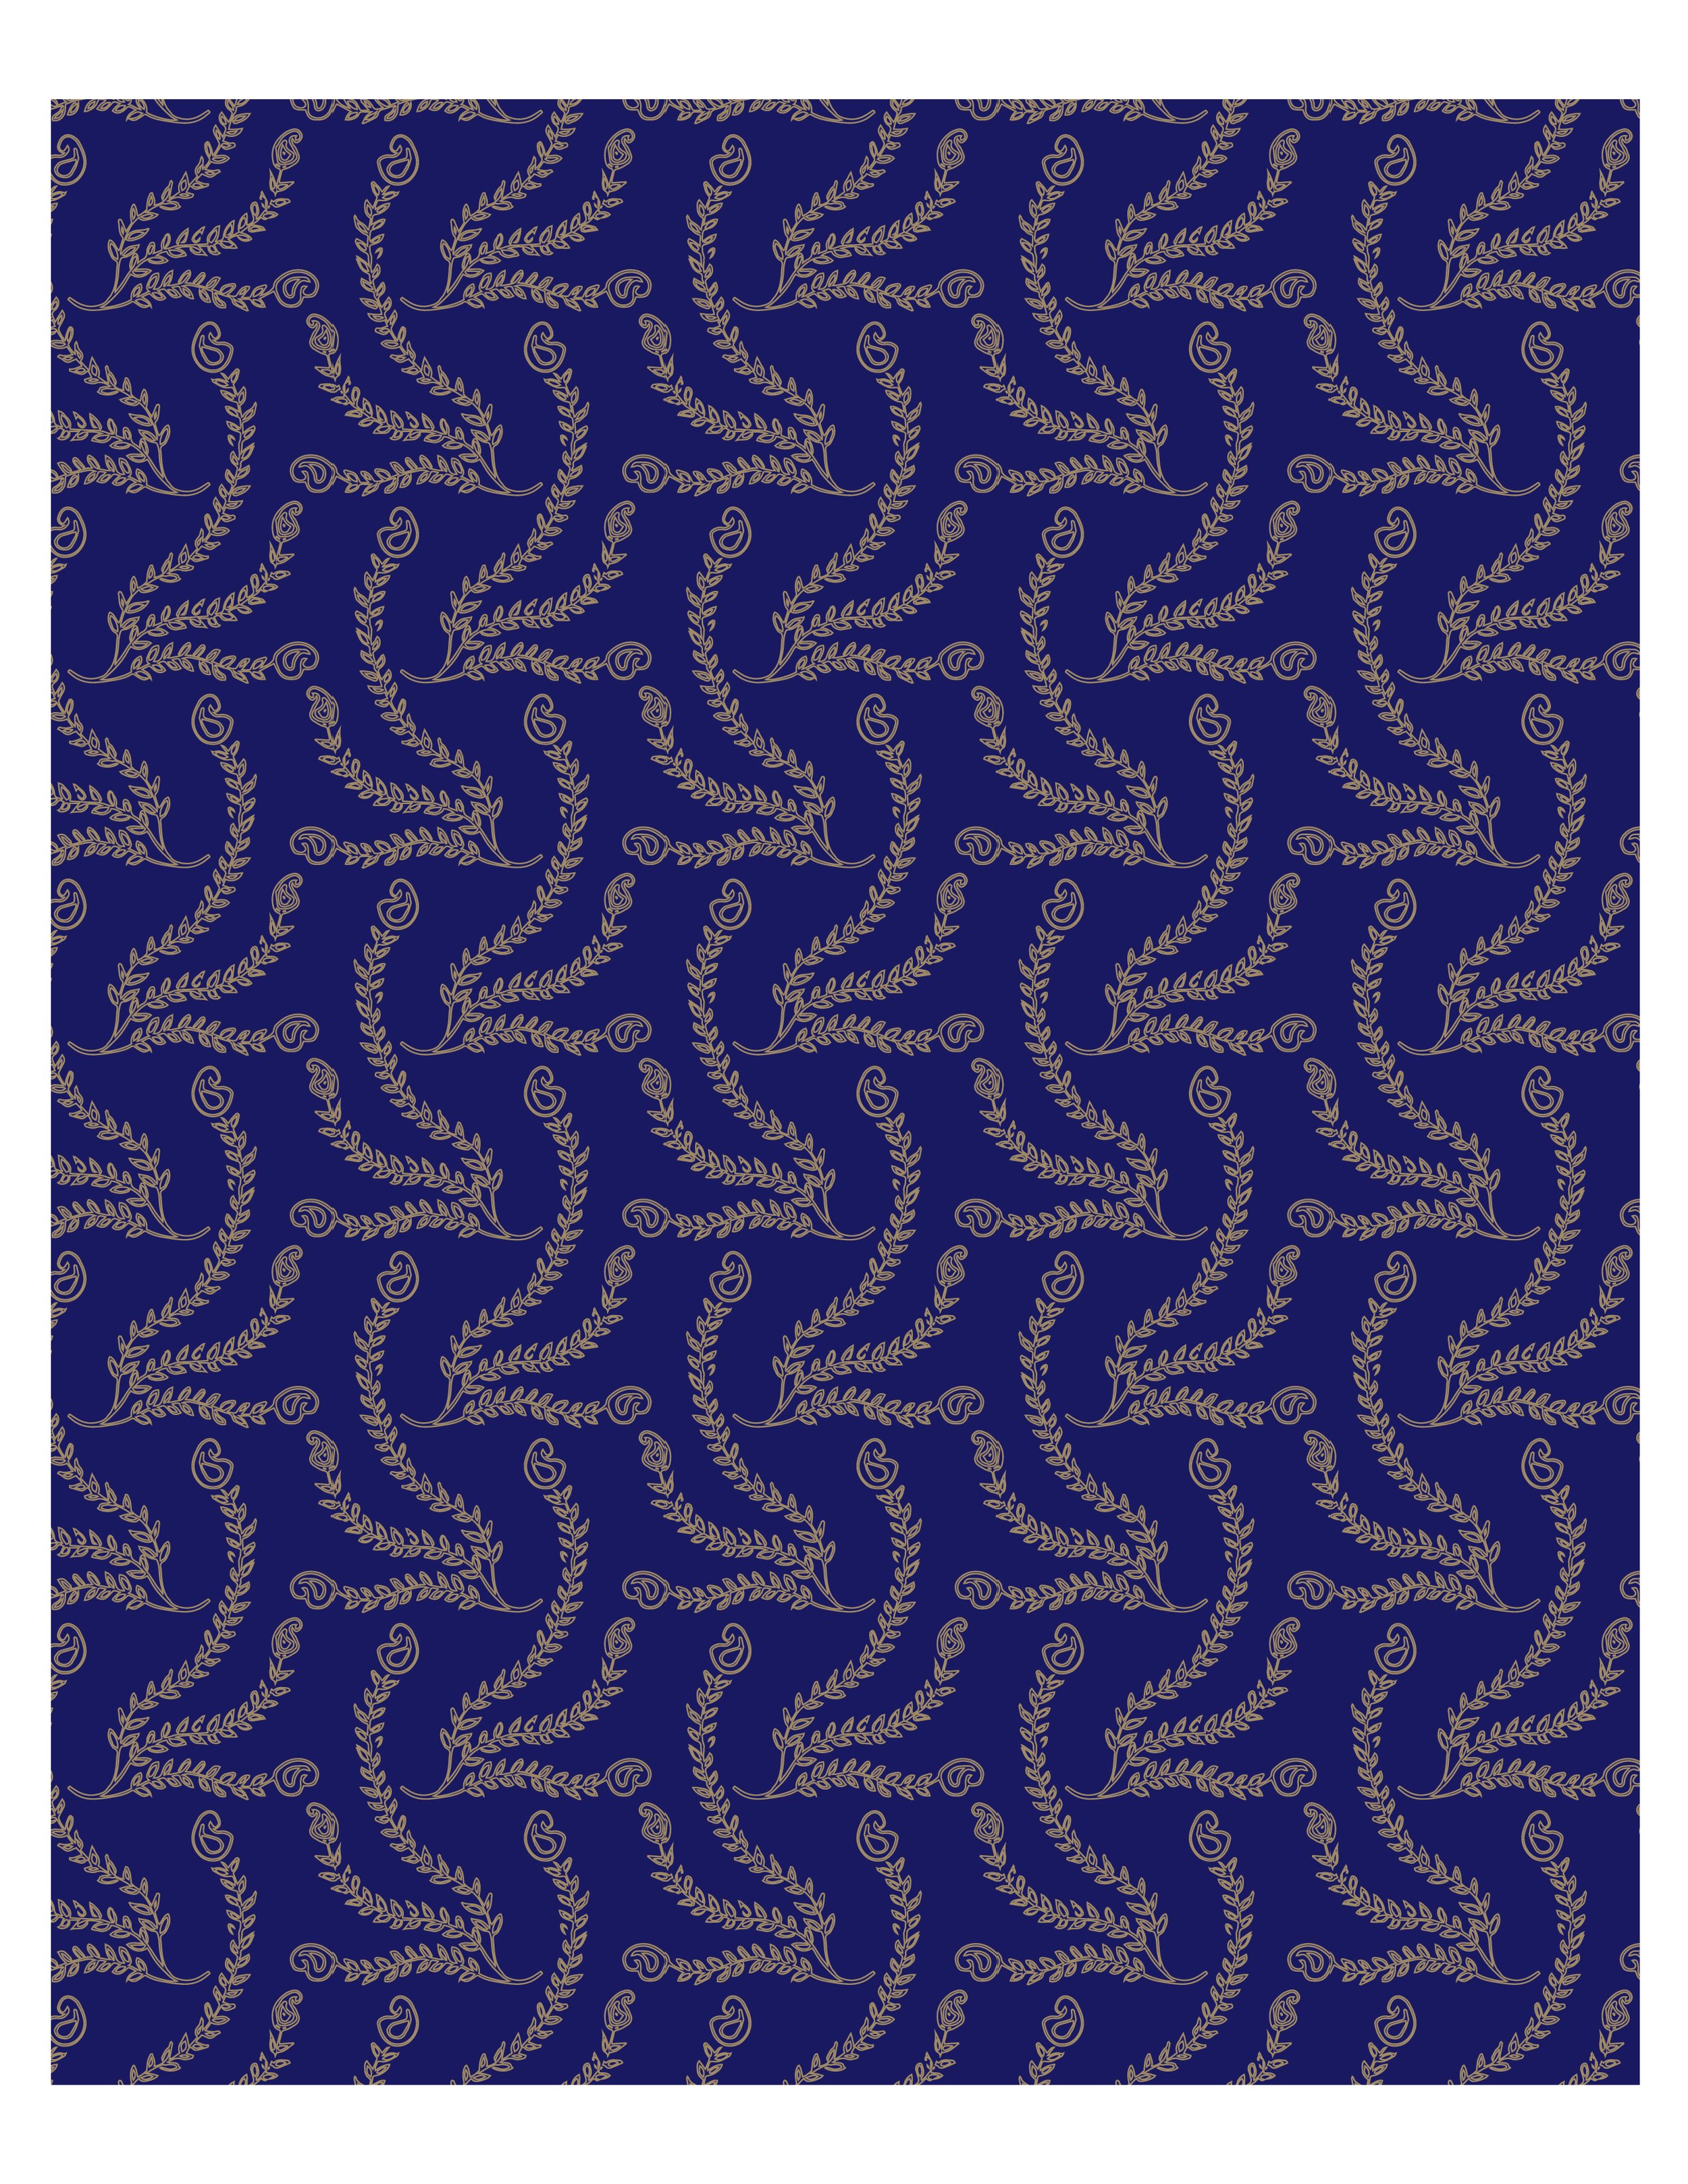 Three Stem Paisley Midnight Pattern Print-01.jpg